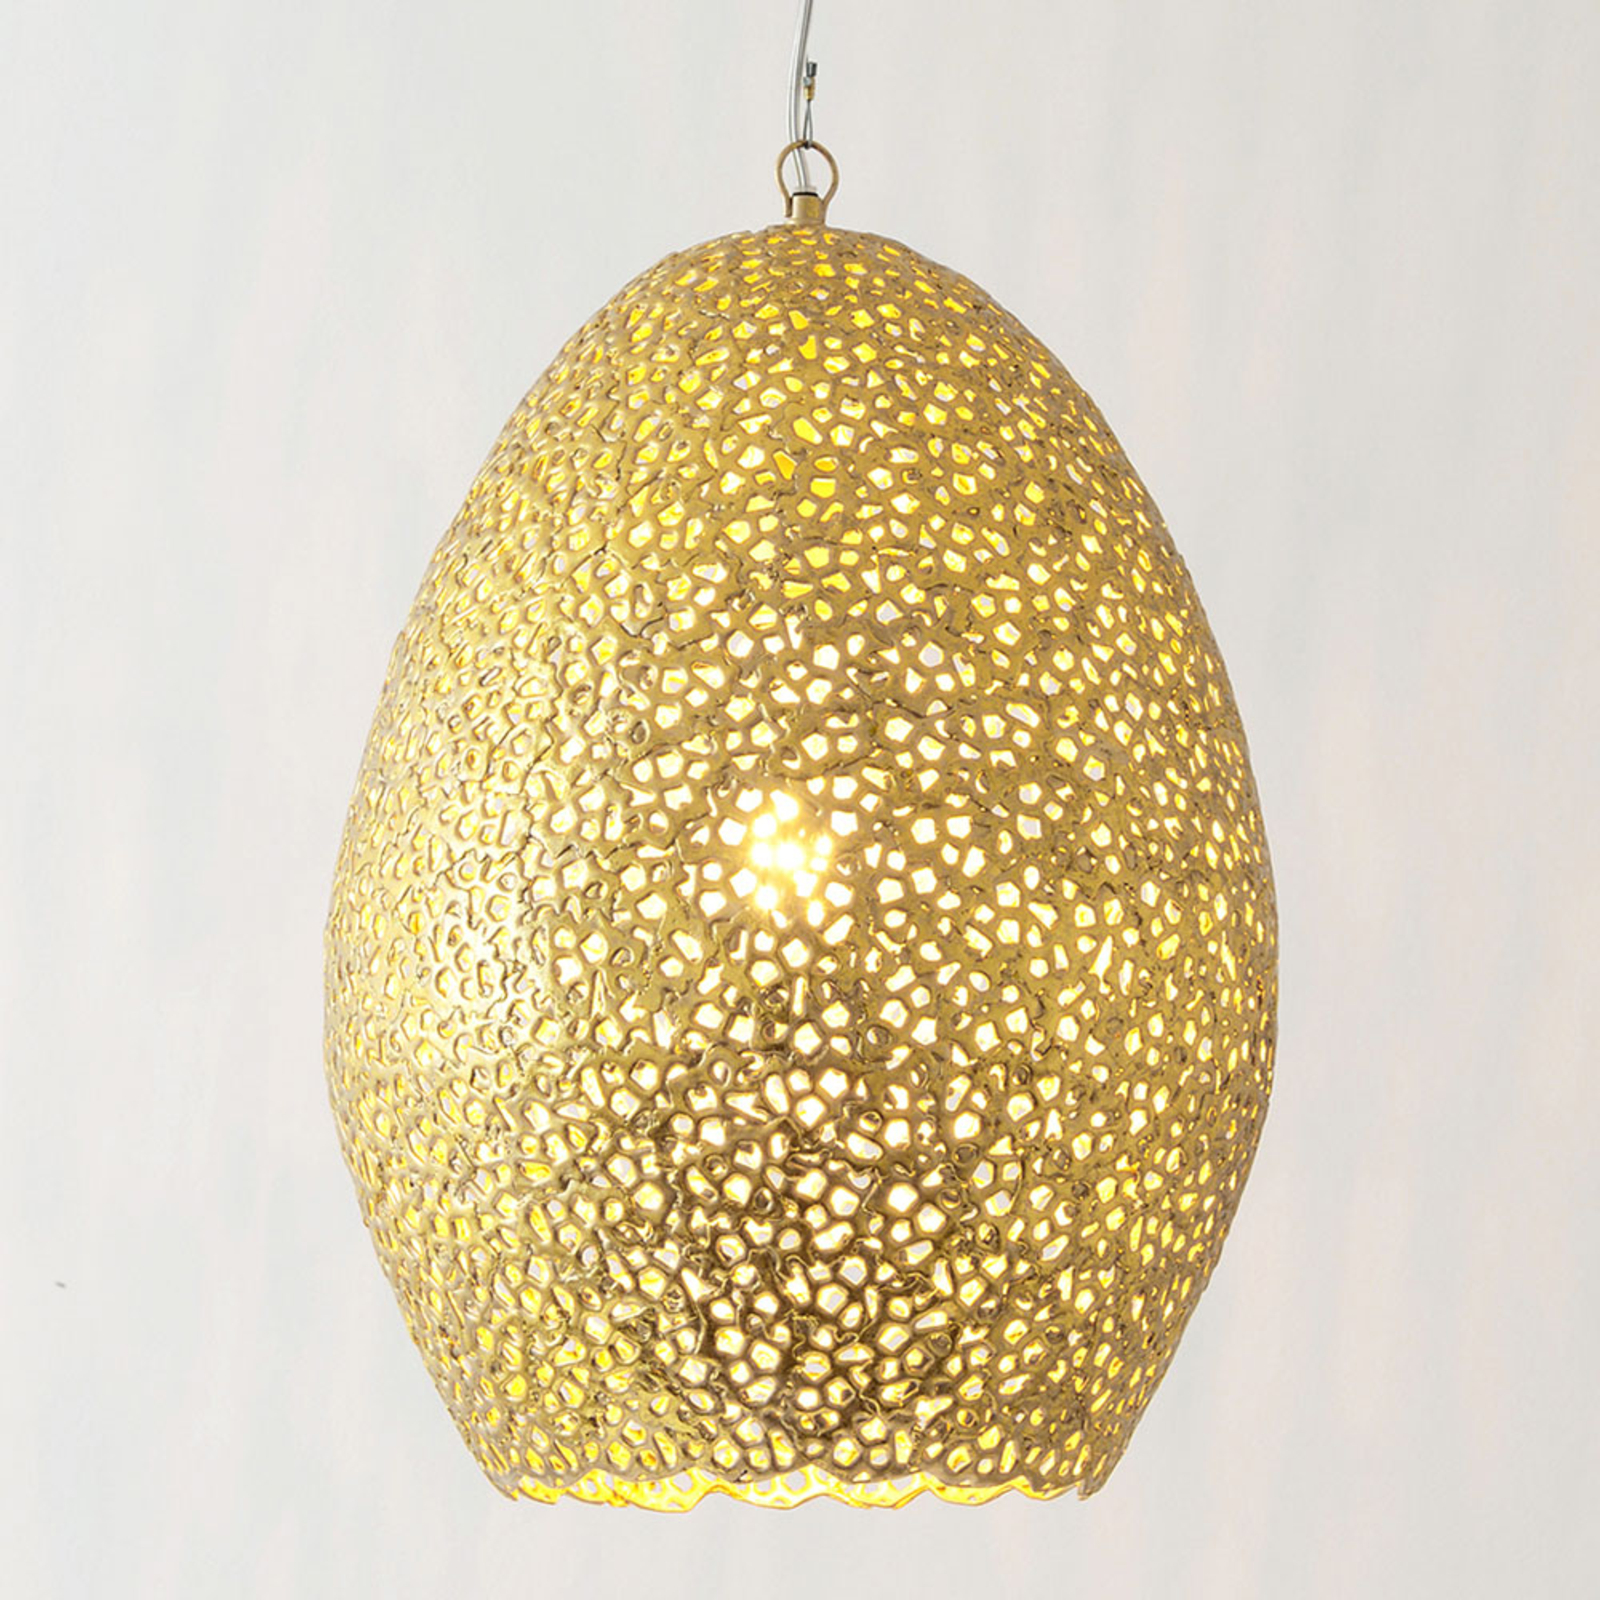 Cavalliere hanglamp, goud, Ø 34 cm